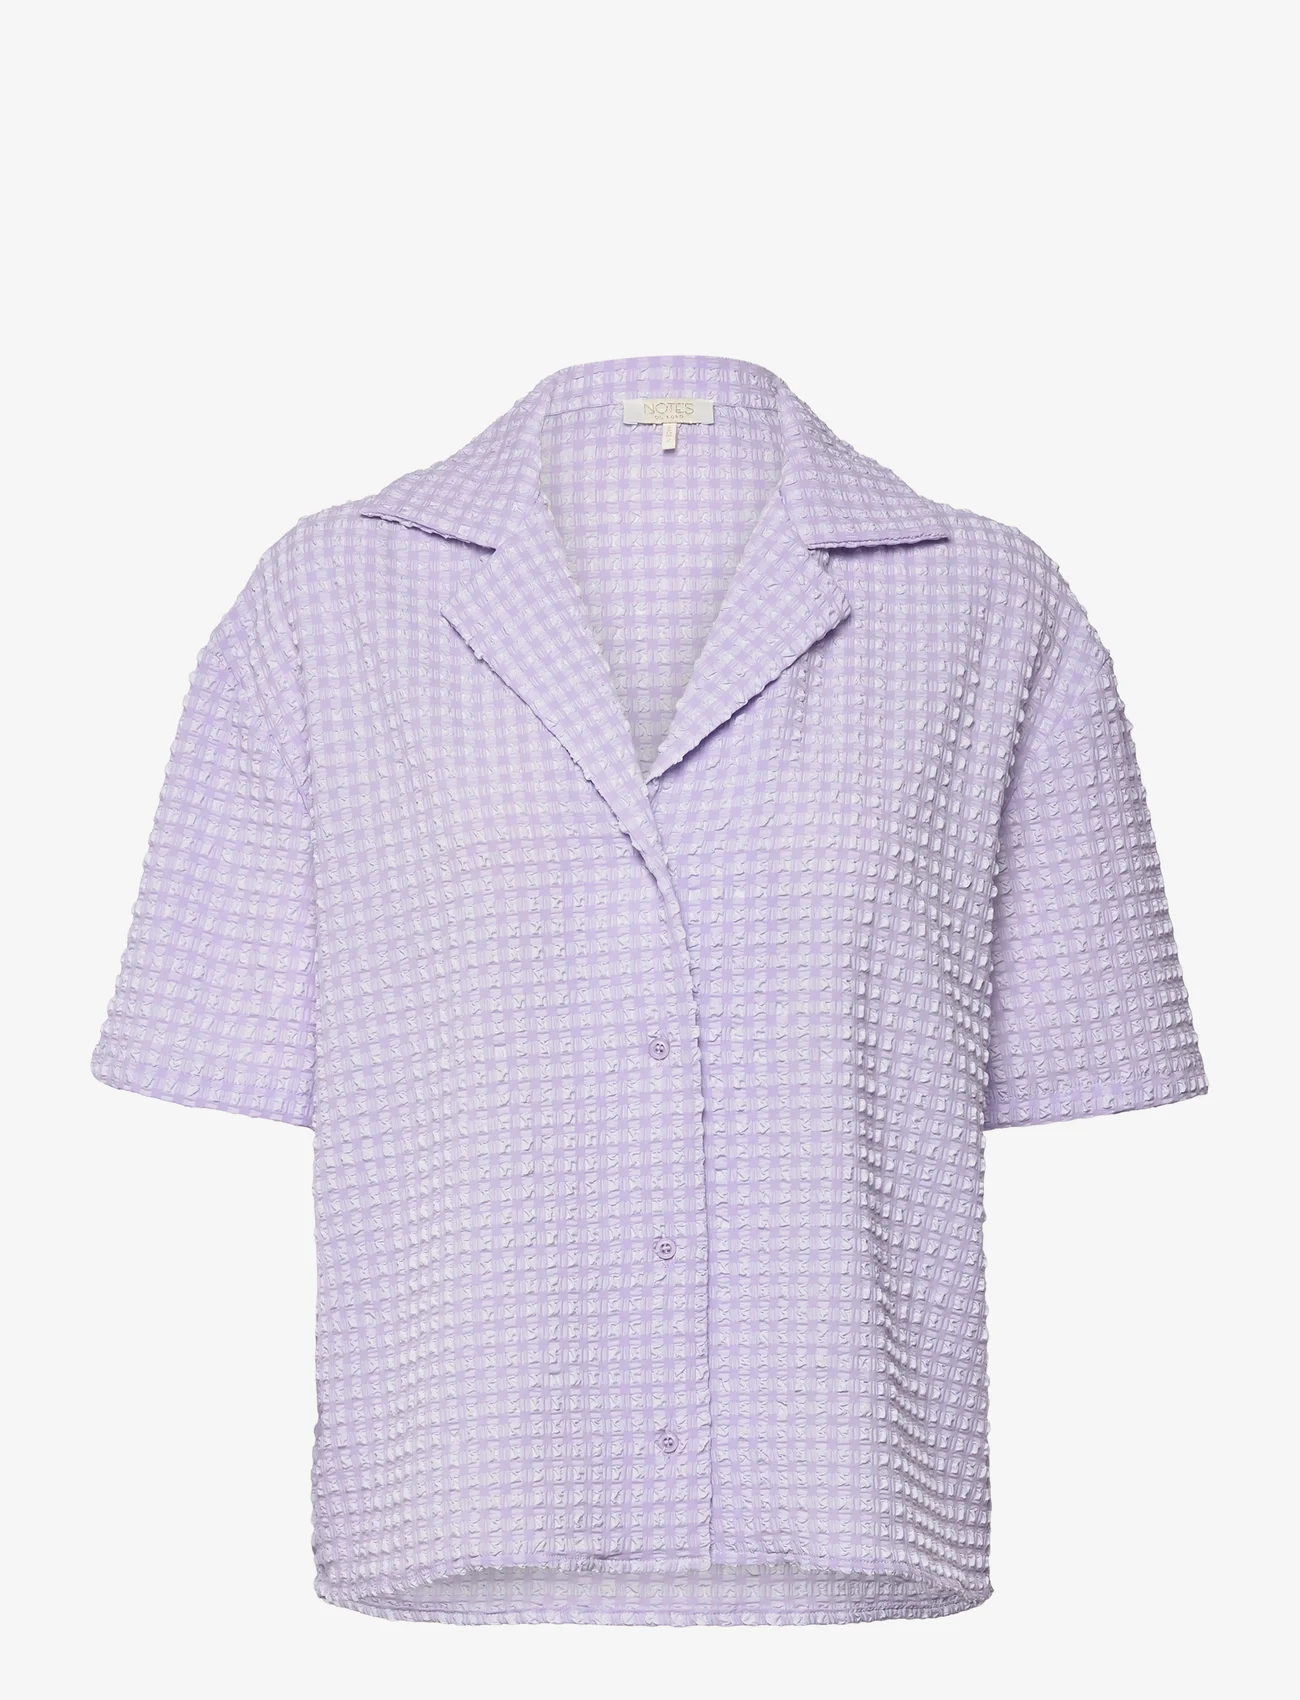 Notes du Nord - Darcy Shirt - lavender - 0